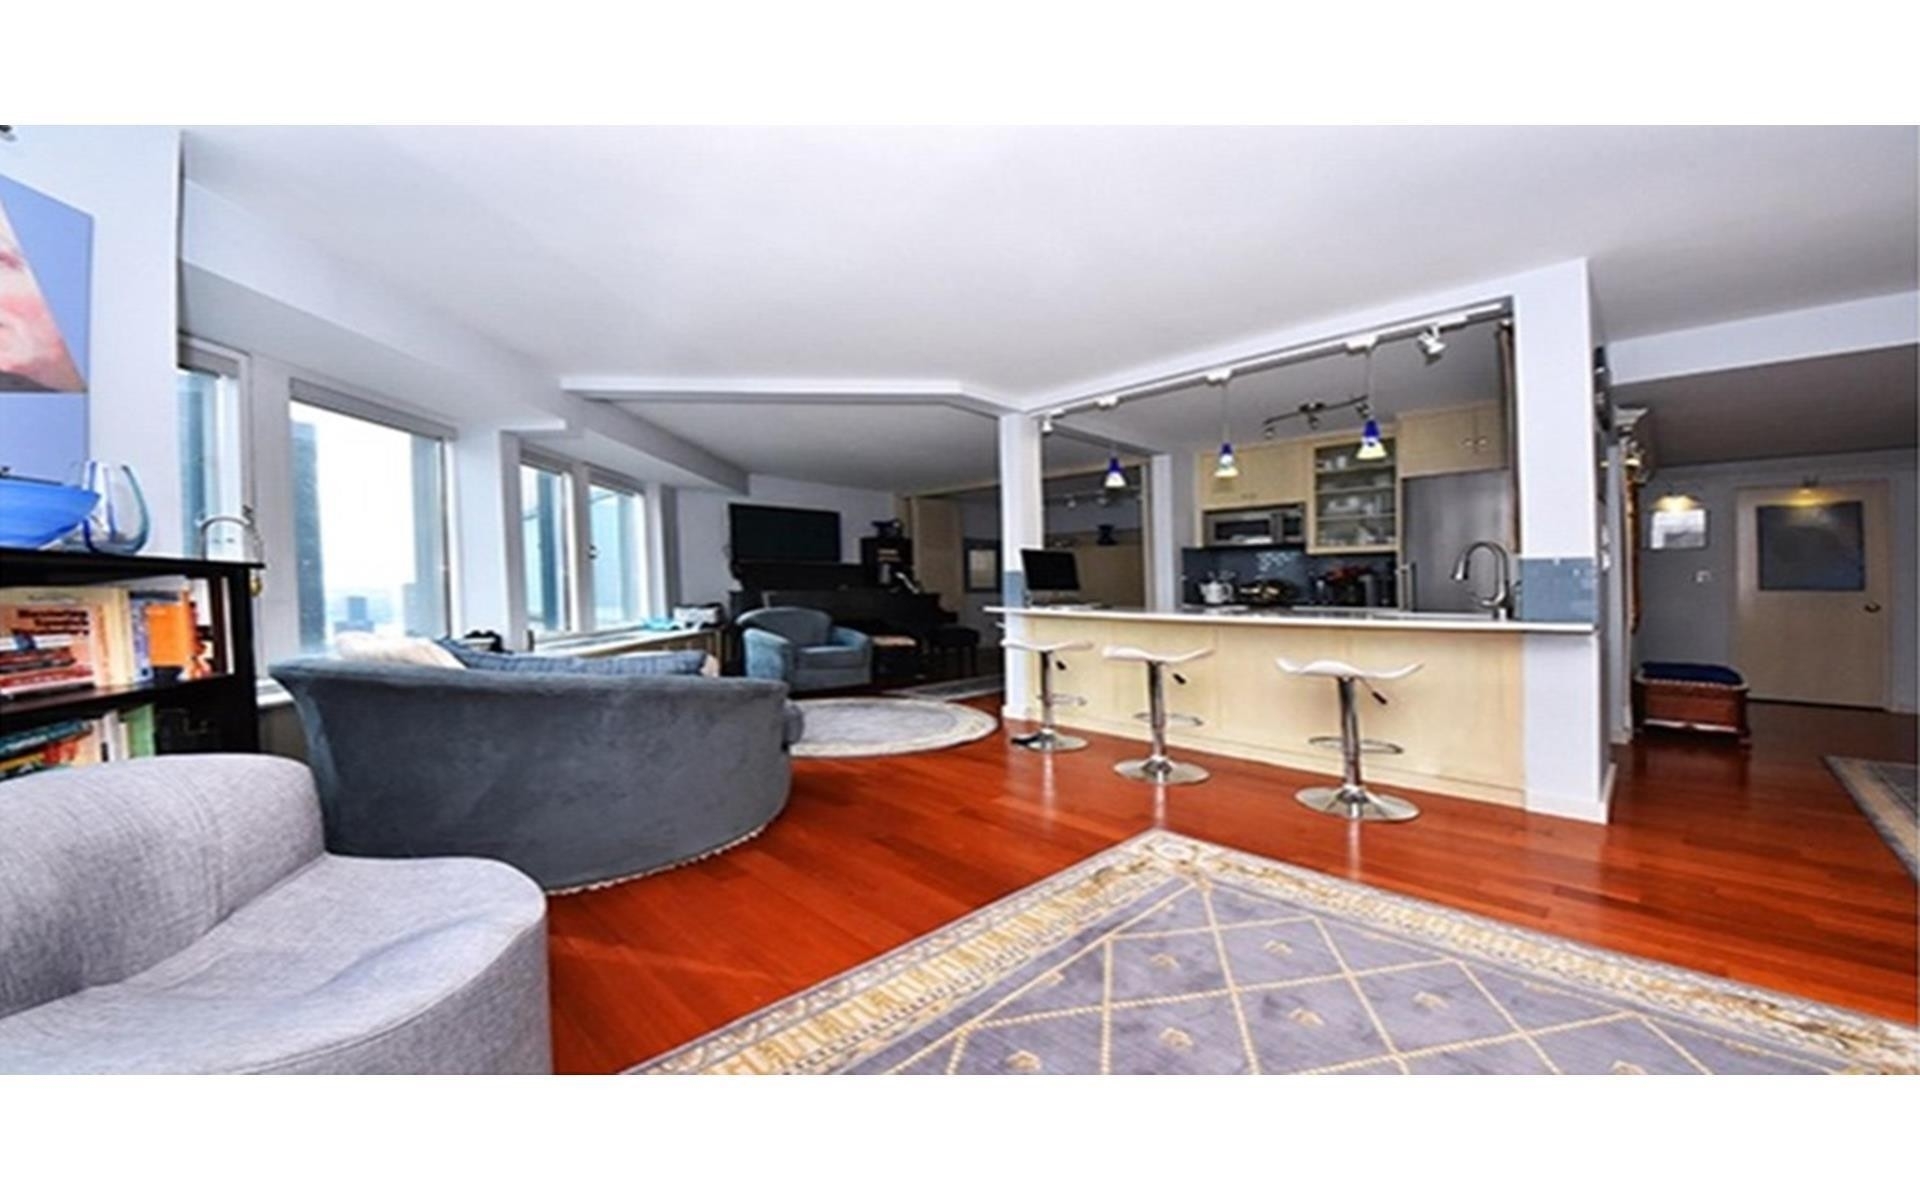 Condominium for Sale at Cityspire, 150 W 56TH ST, 4410 Midtown West, New York, New York 10019